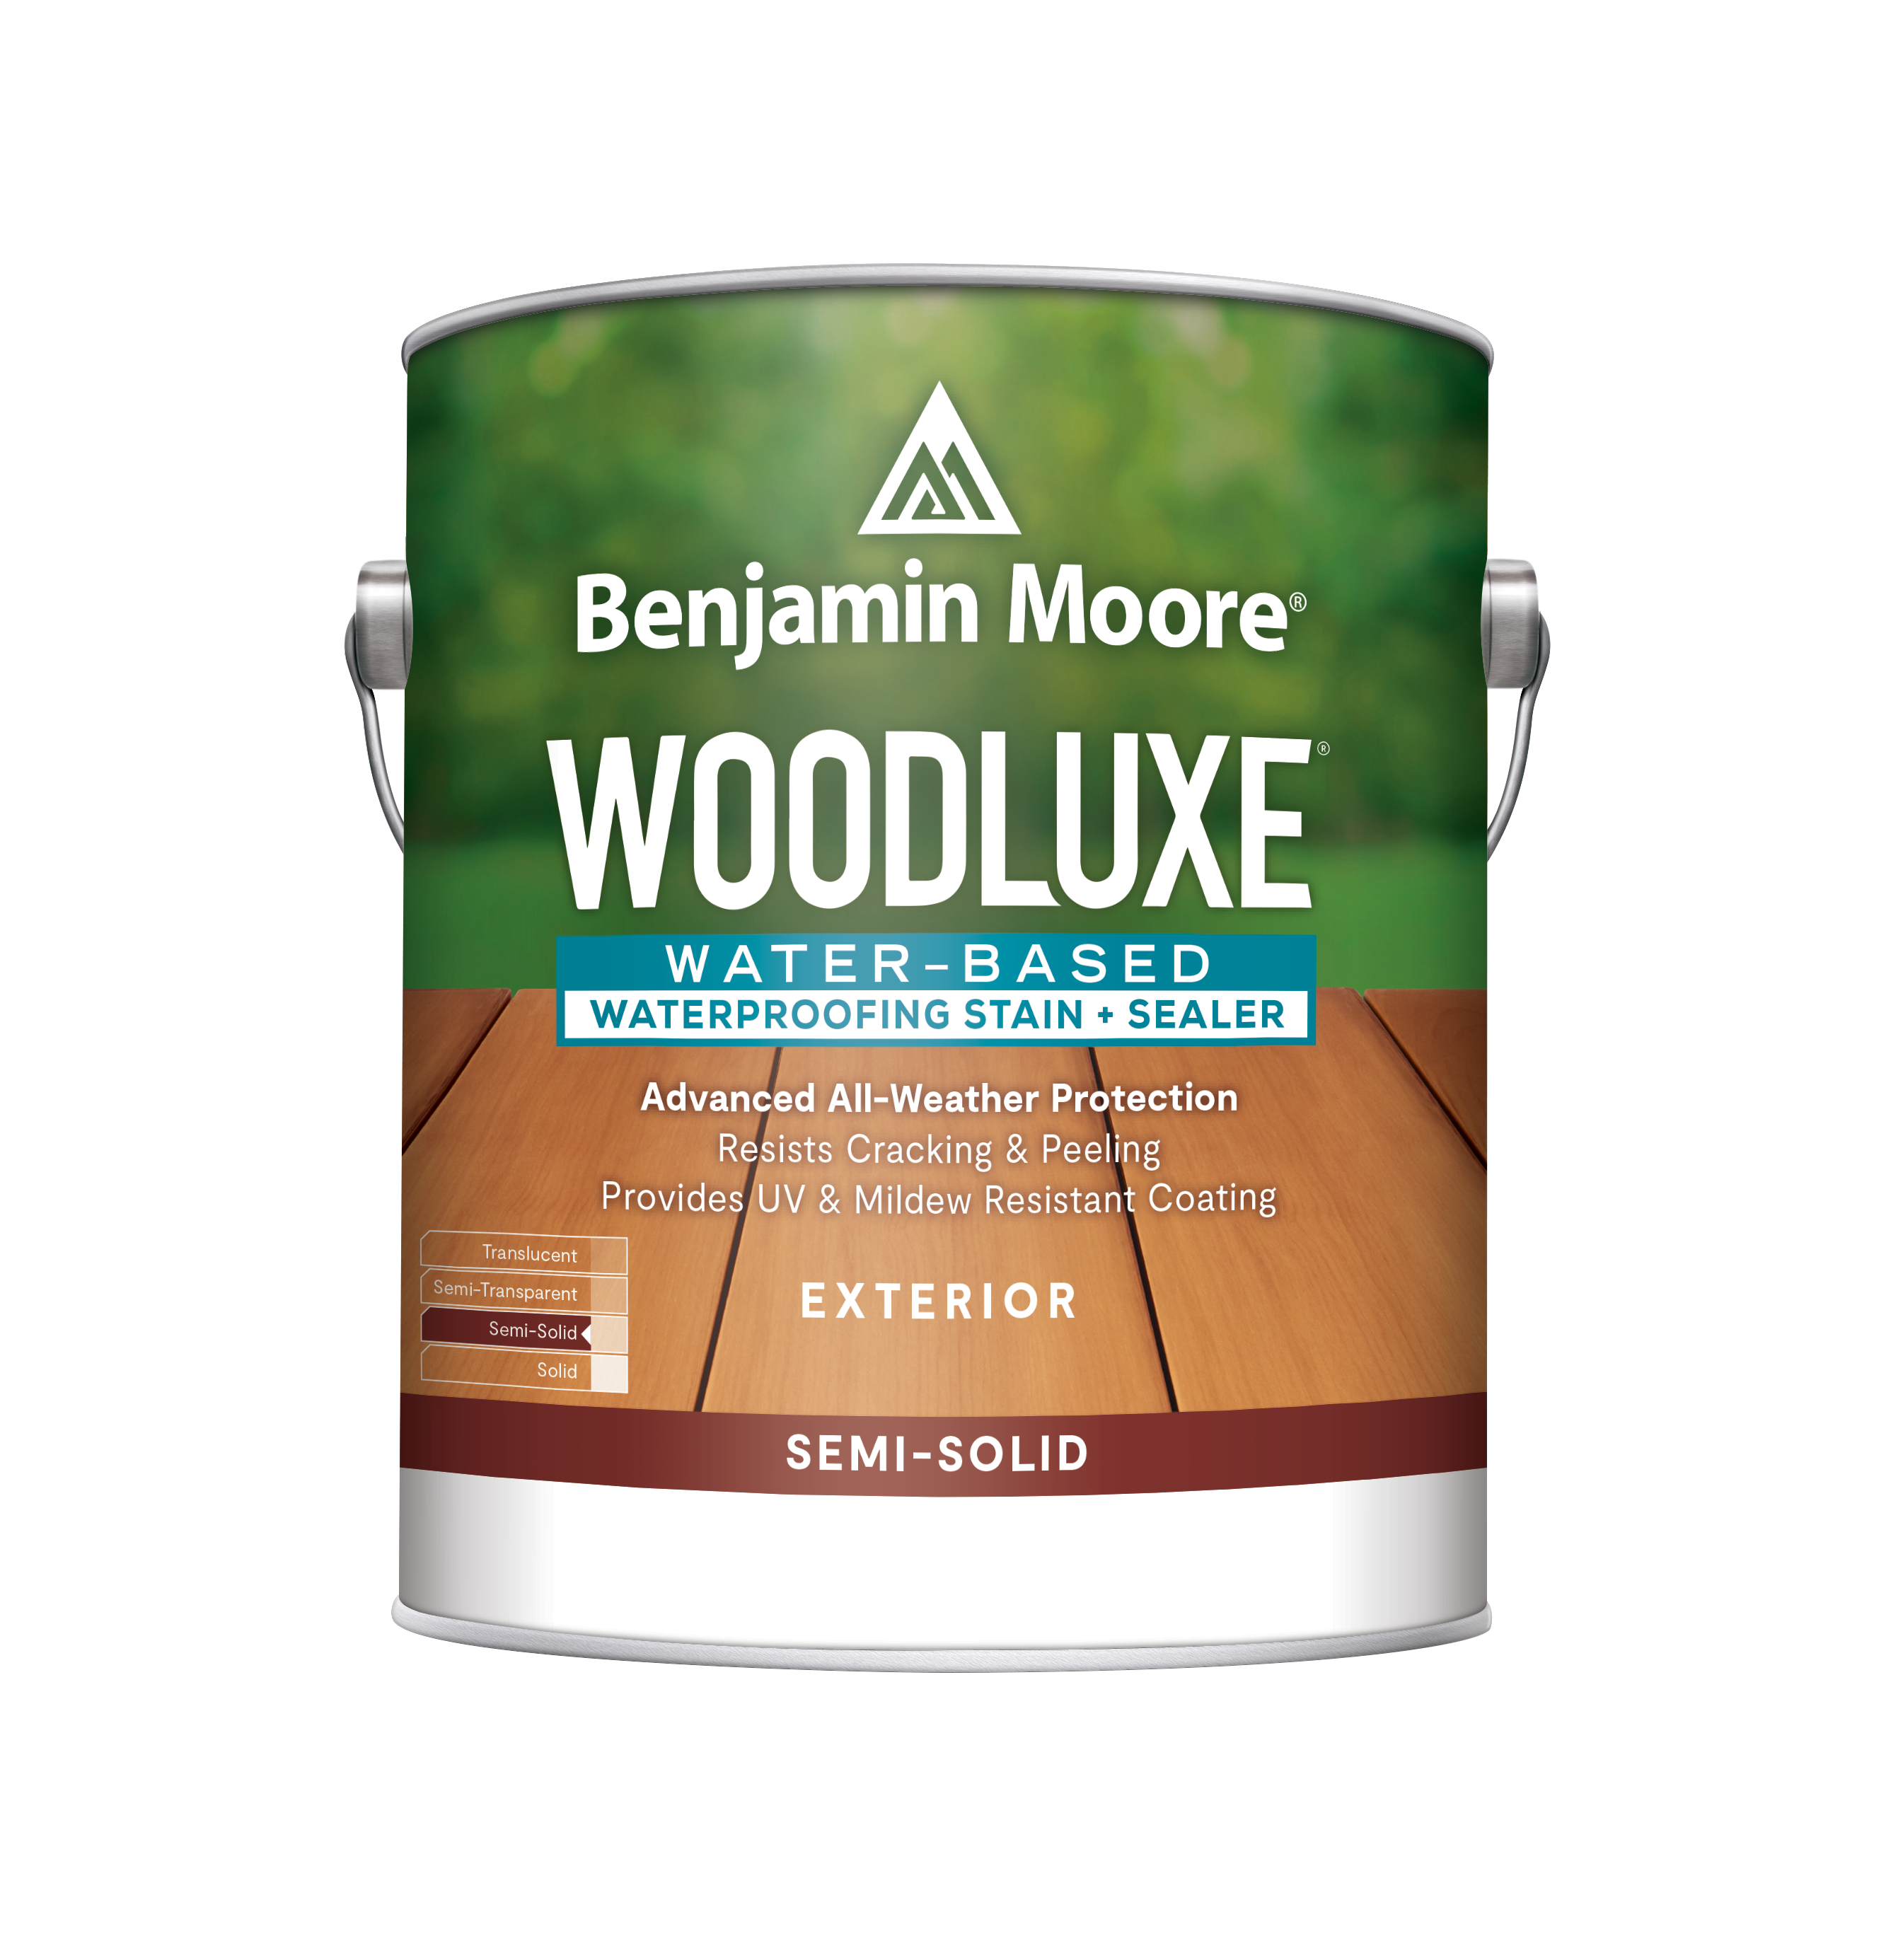 Woodluxe® Water-Based Waterproofing Stain + Sealer - Semi-Solid 0693